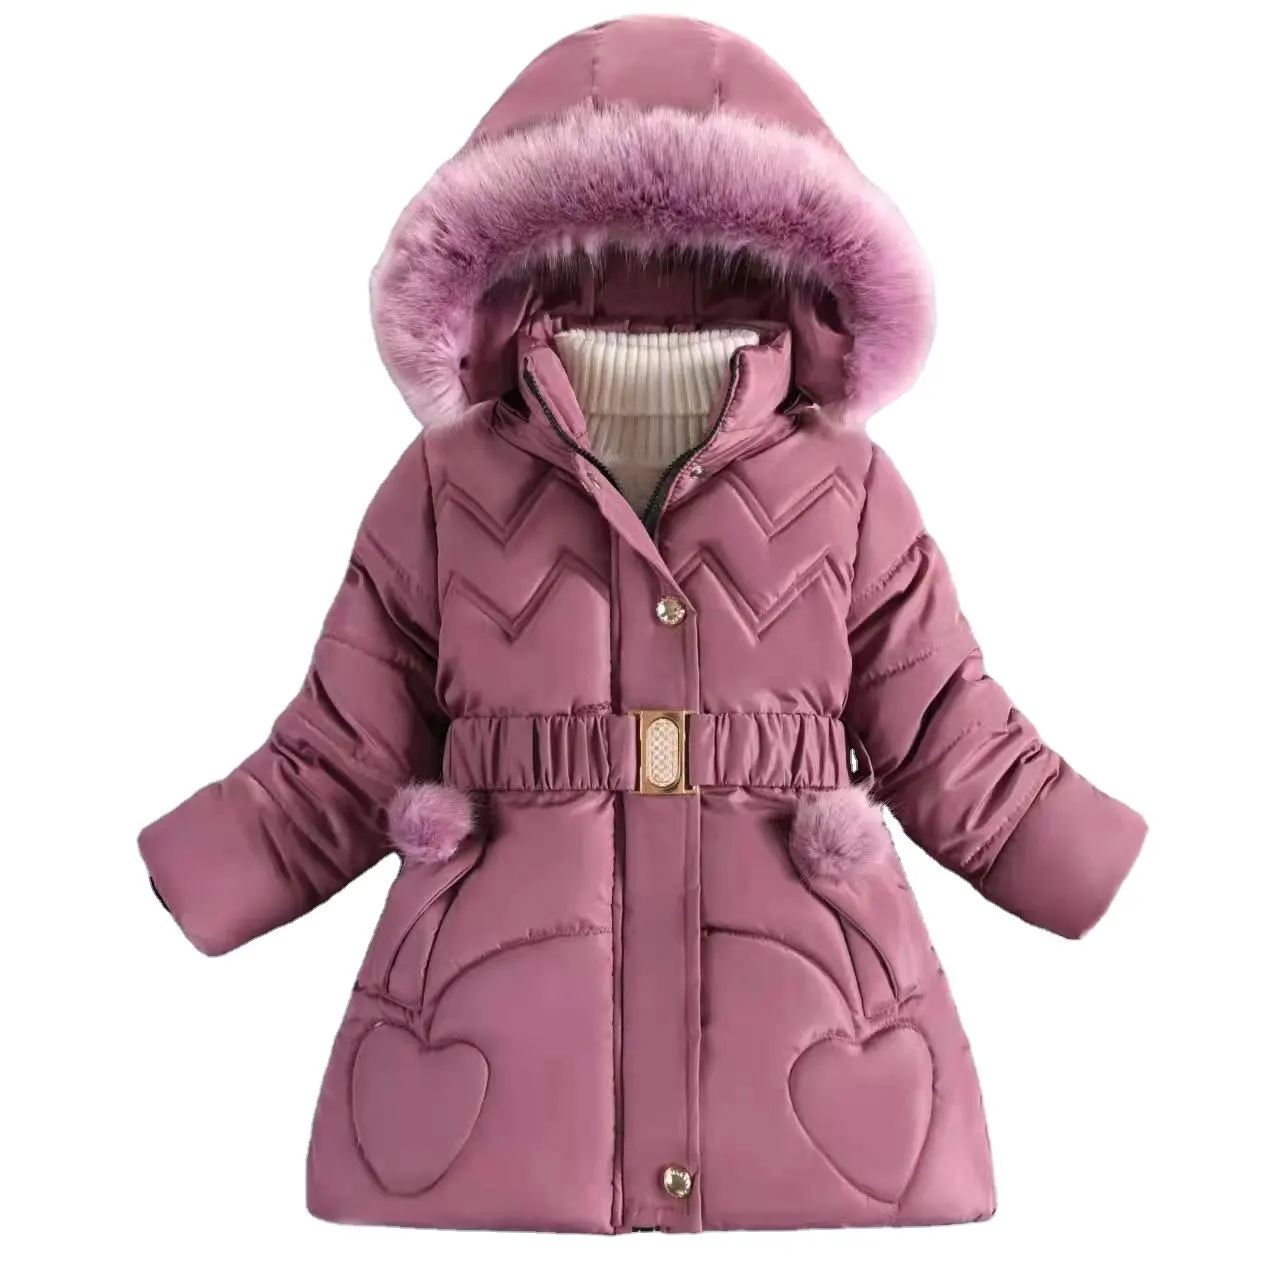 Mantel panjang menengah anak-anak, jaket panjang musim dingin anak-anak warna polos untuk anak perempuan santai olahraga modis katun pakaian empuk bayi